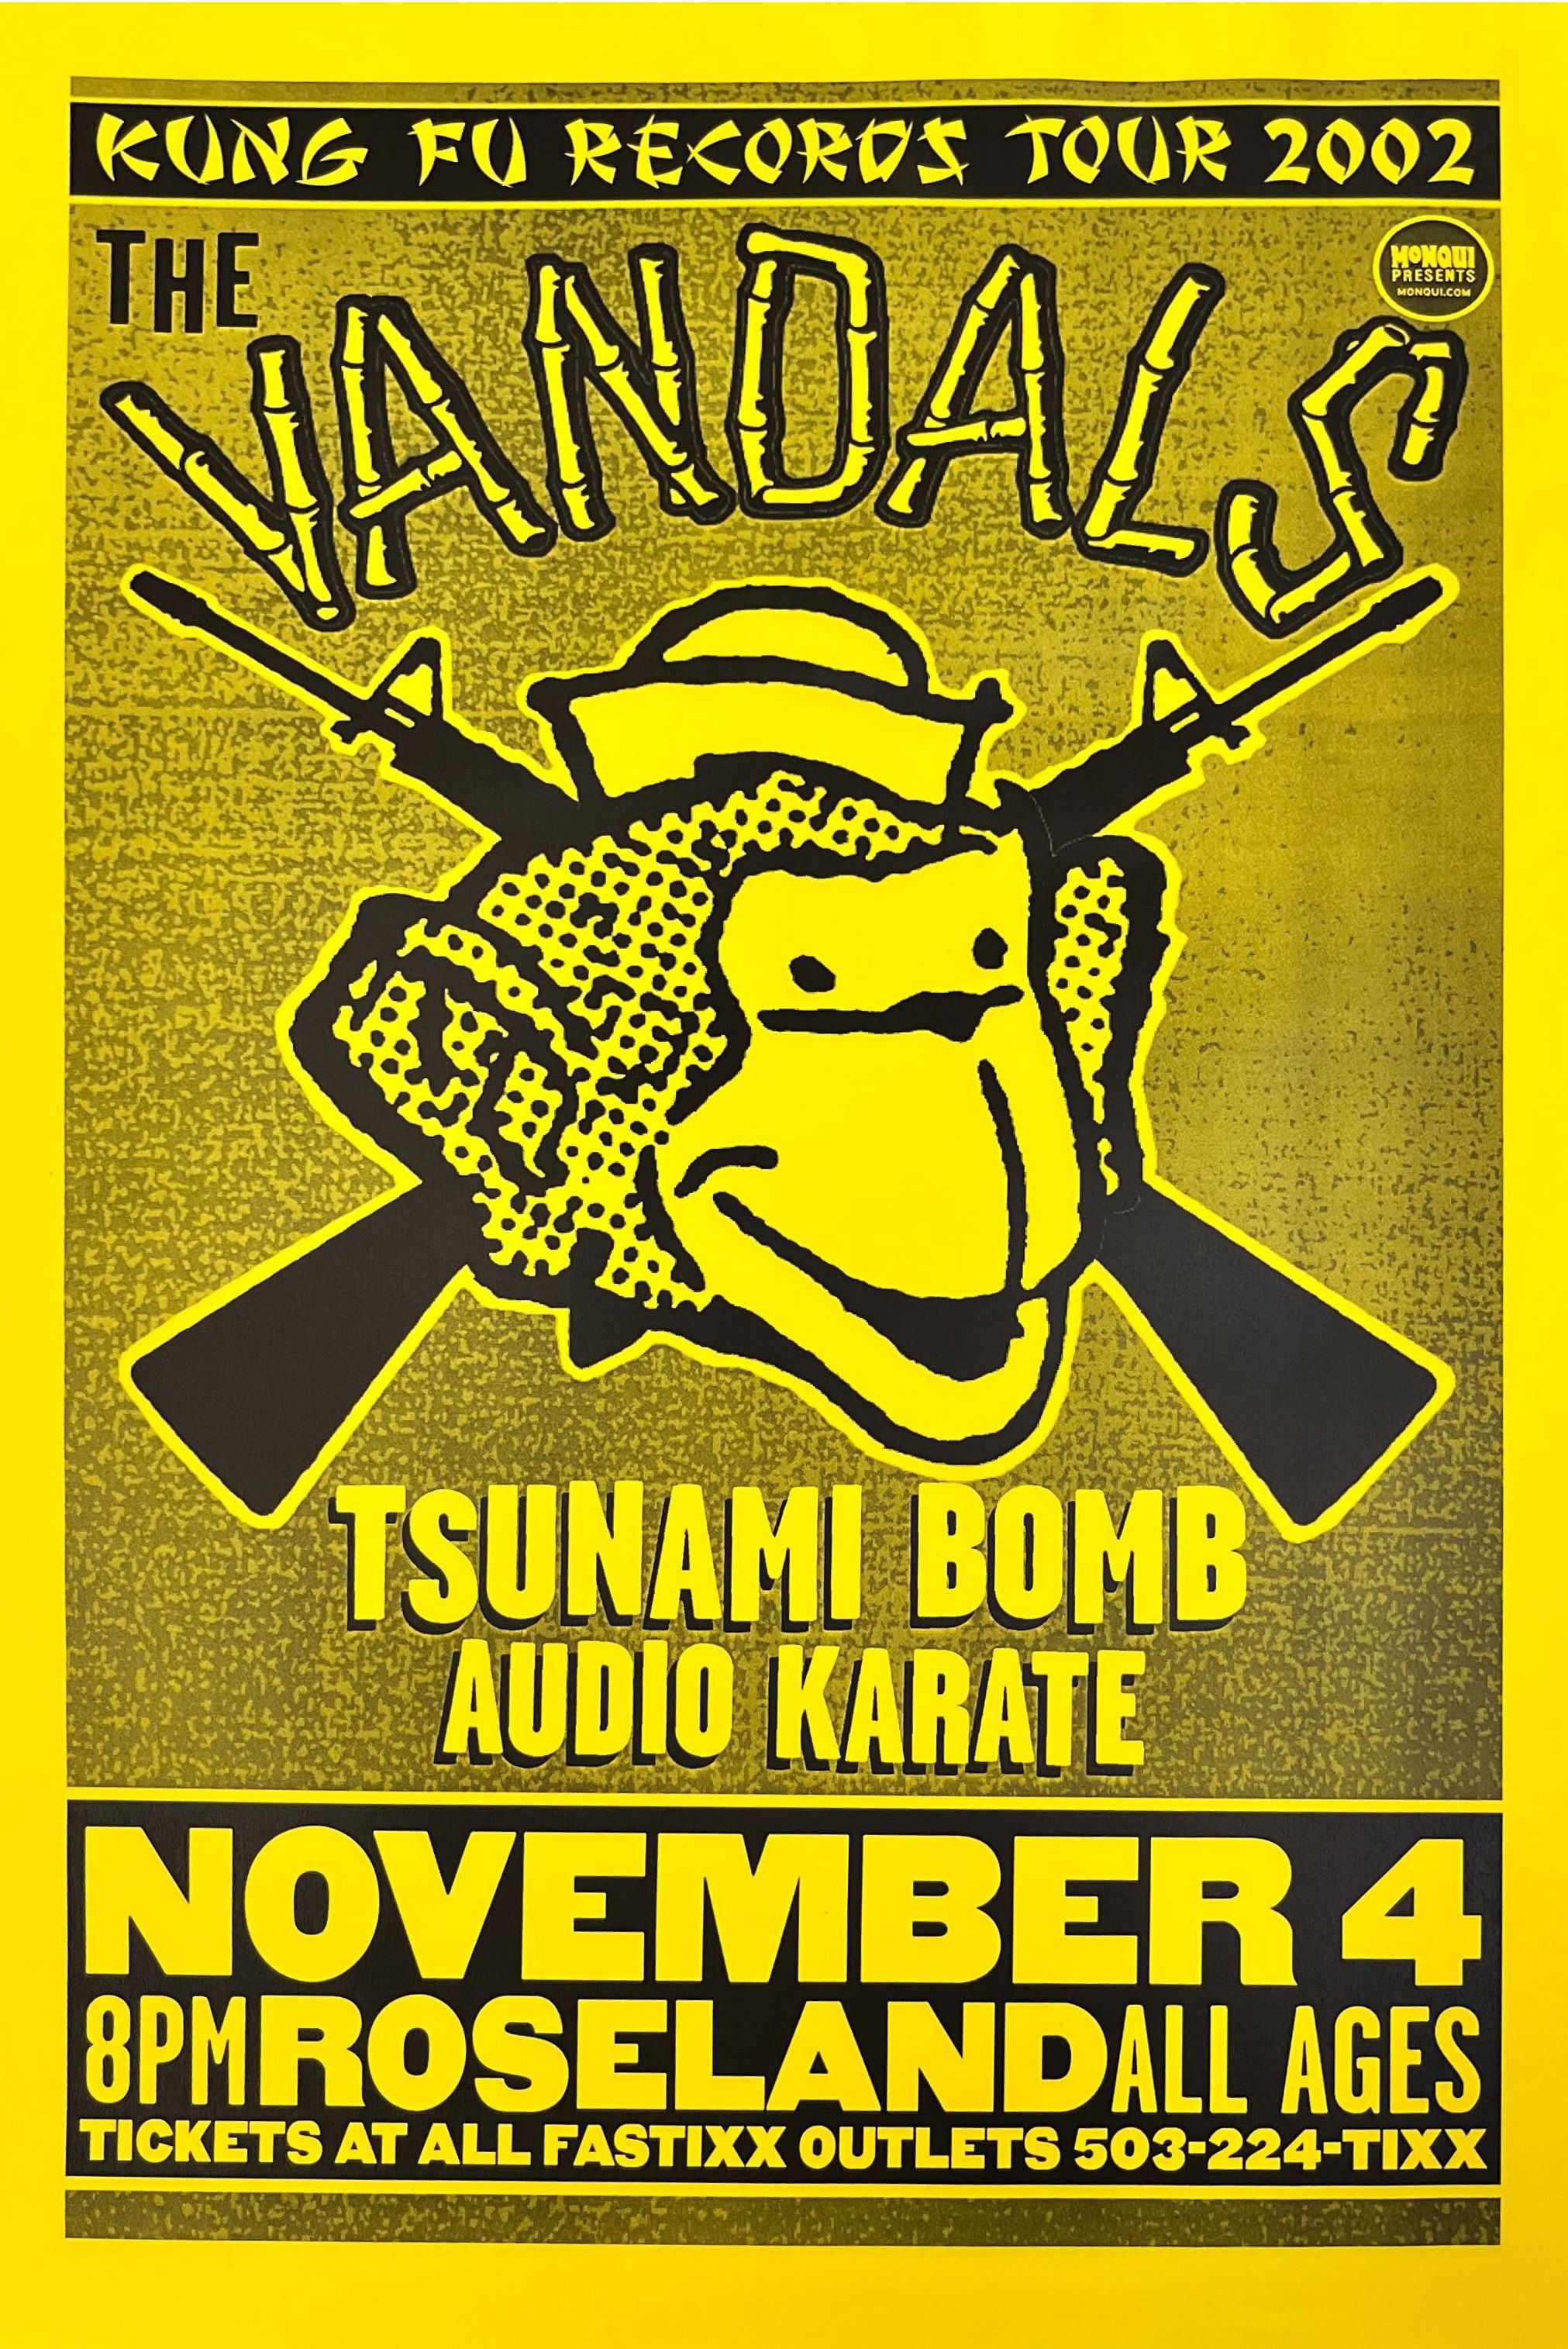 MXP-141.37 Vandals Roseland Theater 2002 Concert Poster